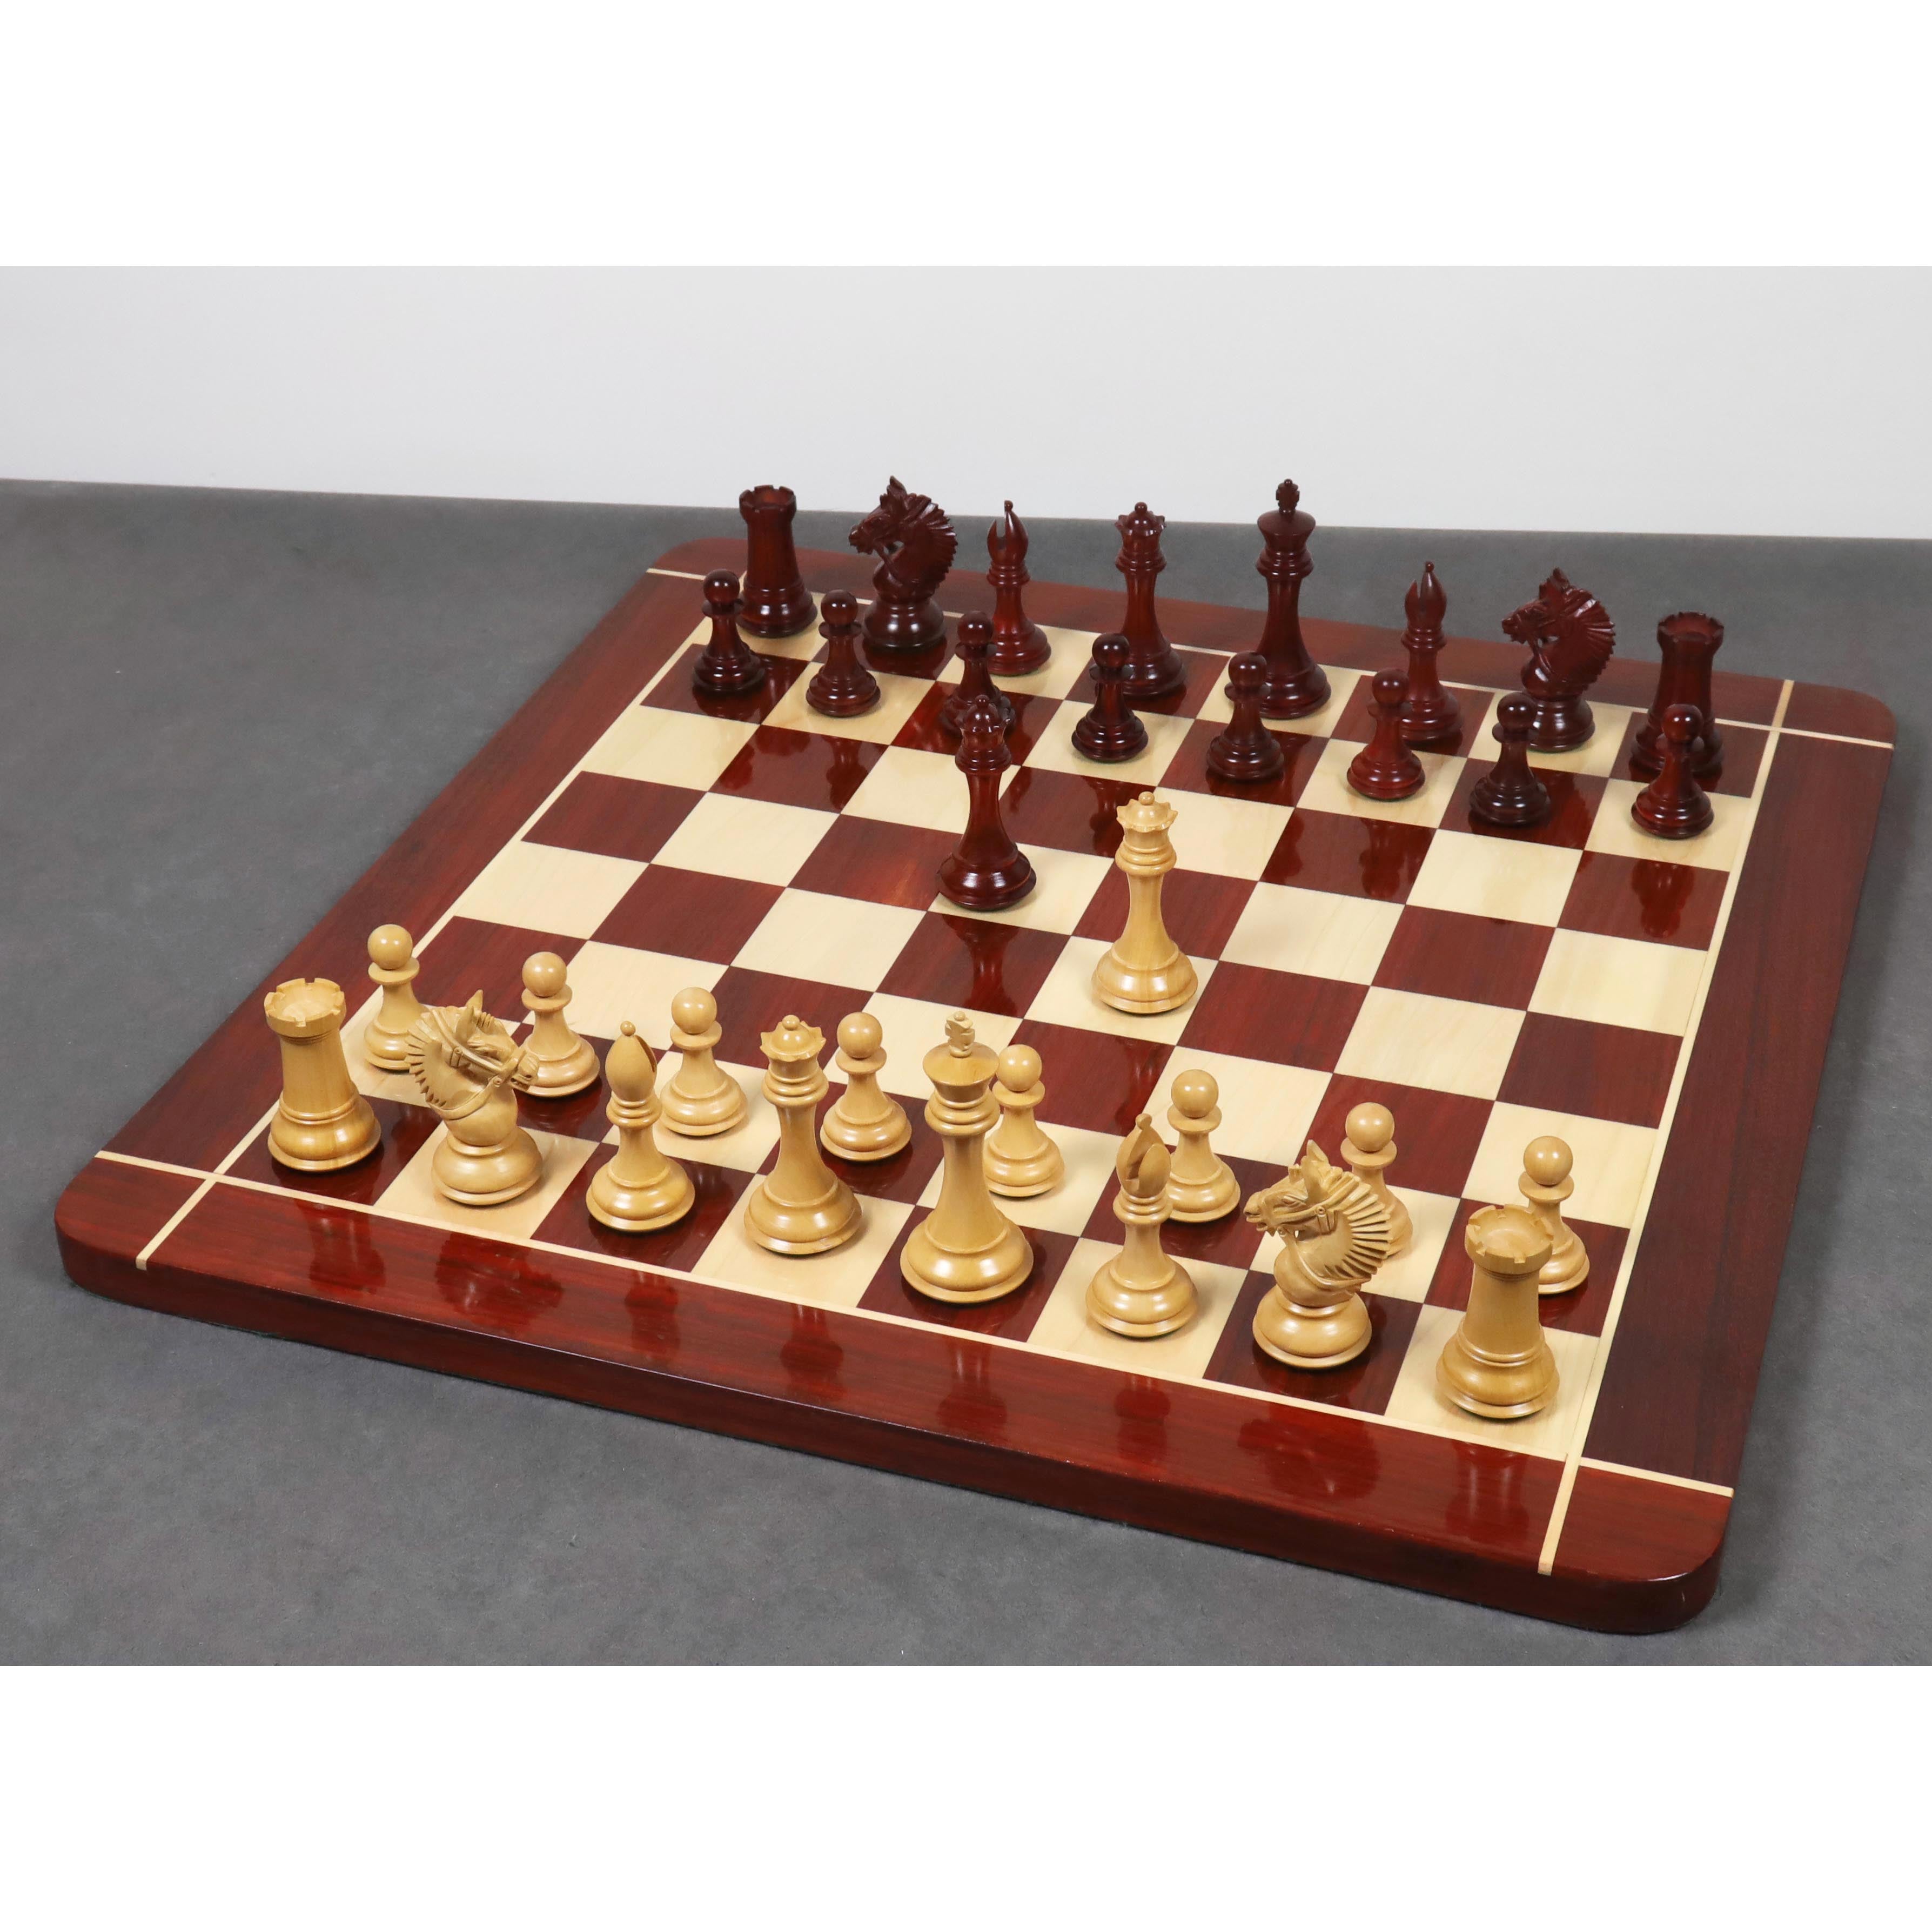 Best wooden chess set under $60! Check out this Wegiel Chess Set